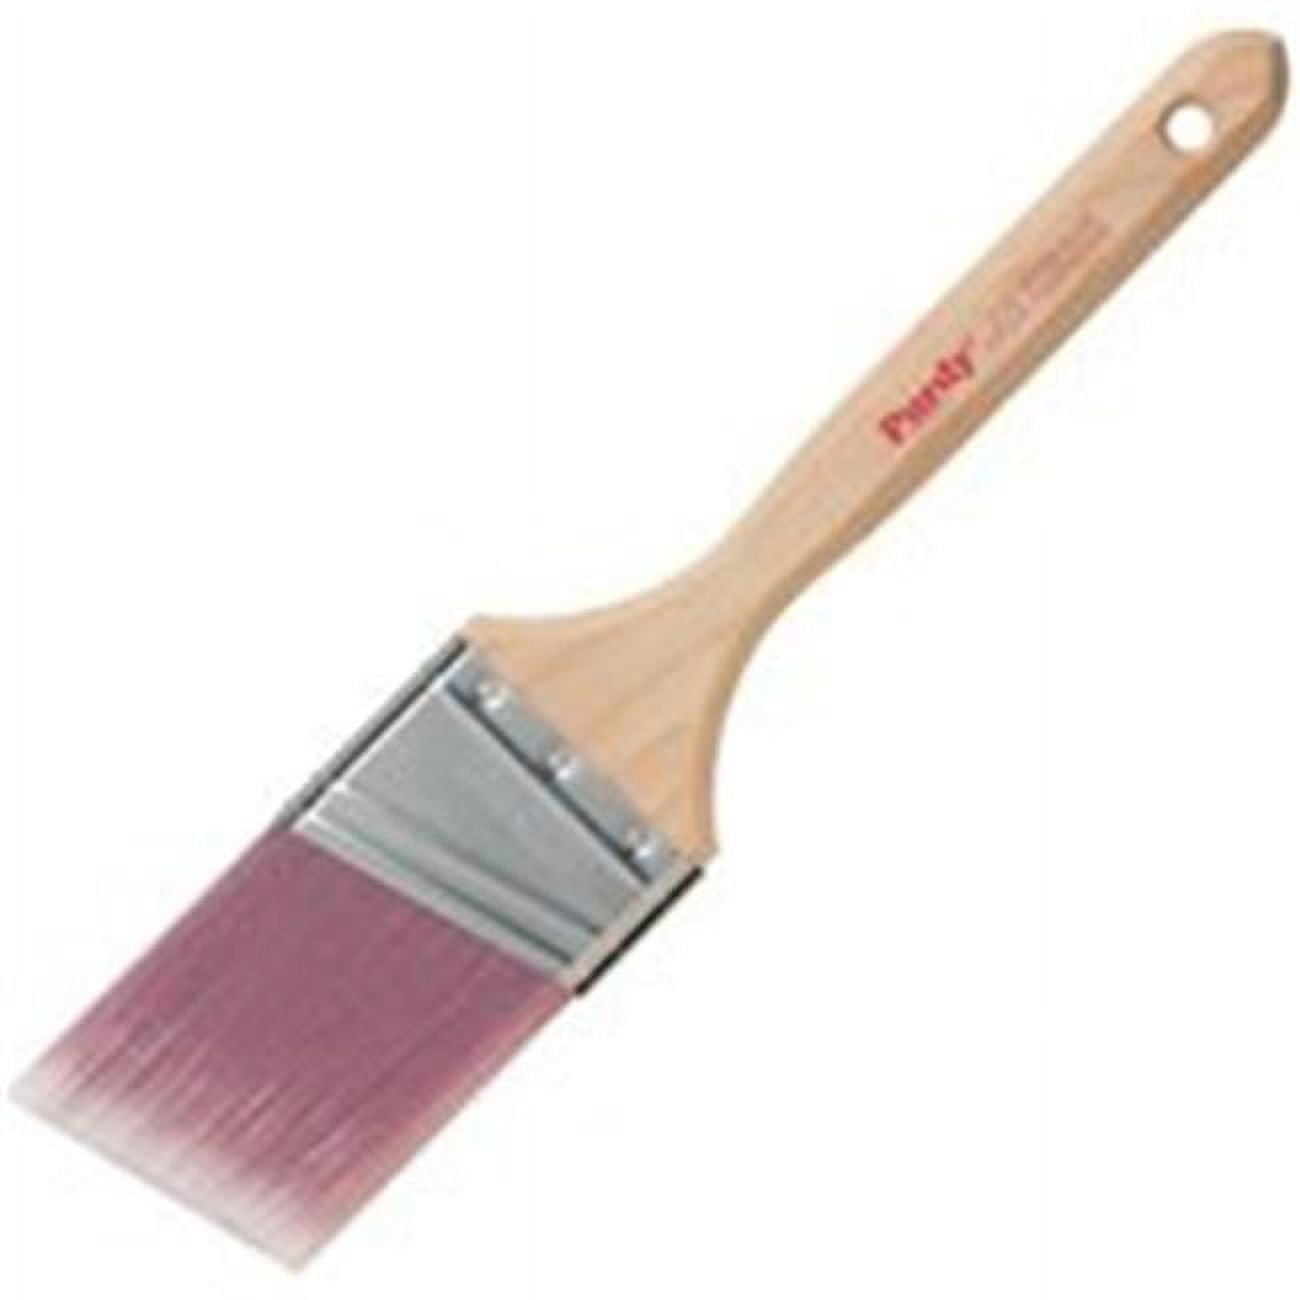 Buy NOUR AquaGlide 1851-25N Angular Paint Brush, 1 in W, Nylon Bristle,  Sash Handle